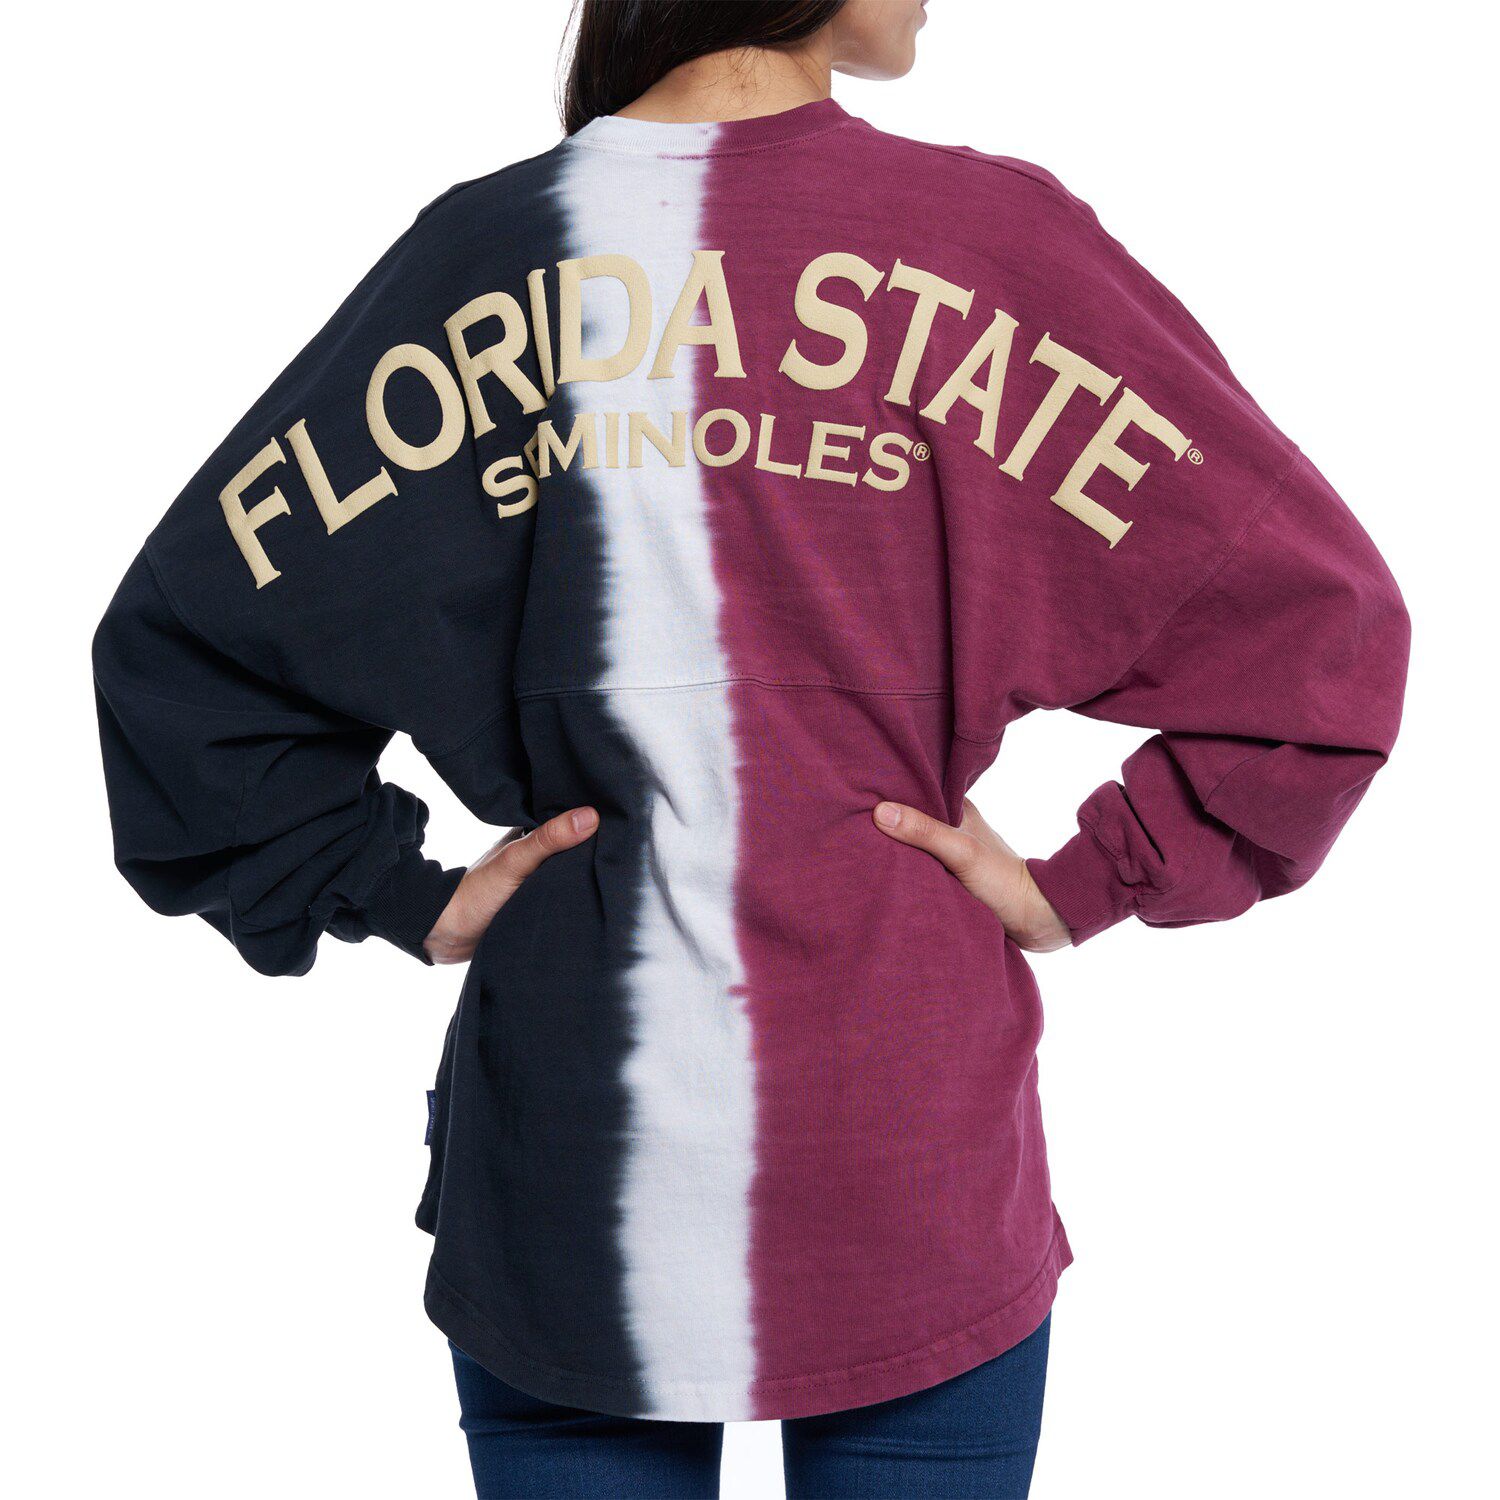 Image for Unbranded Women's Garnet/White Florida State Seminoles Vertical Ombre Spirit Jersey Long Sleeve T-Shirt at Kohl's.